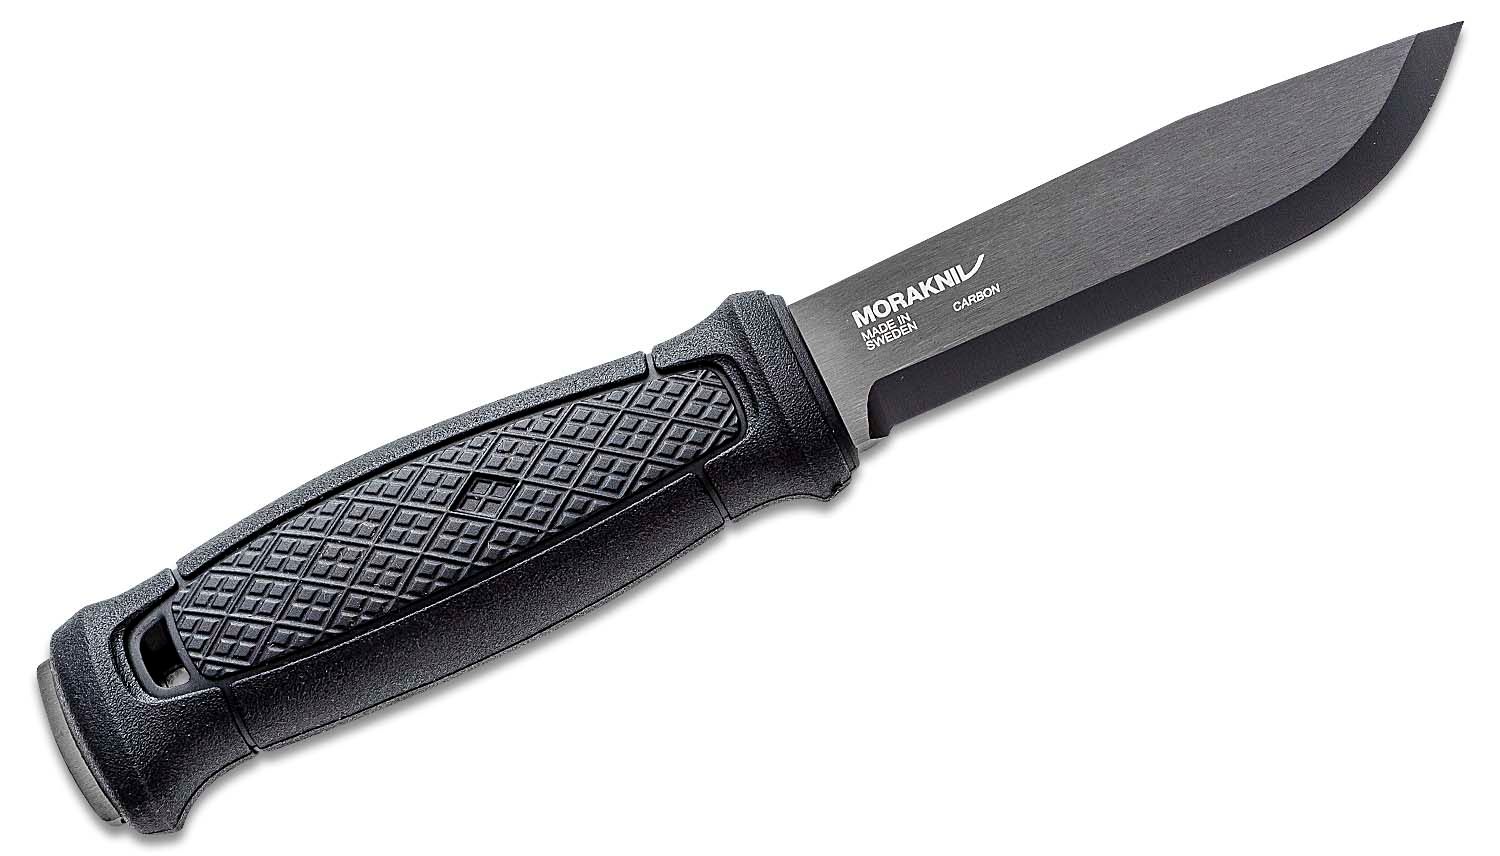 Mora Garberg survival black blade knife features an integrated